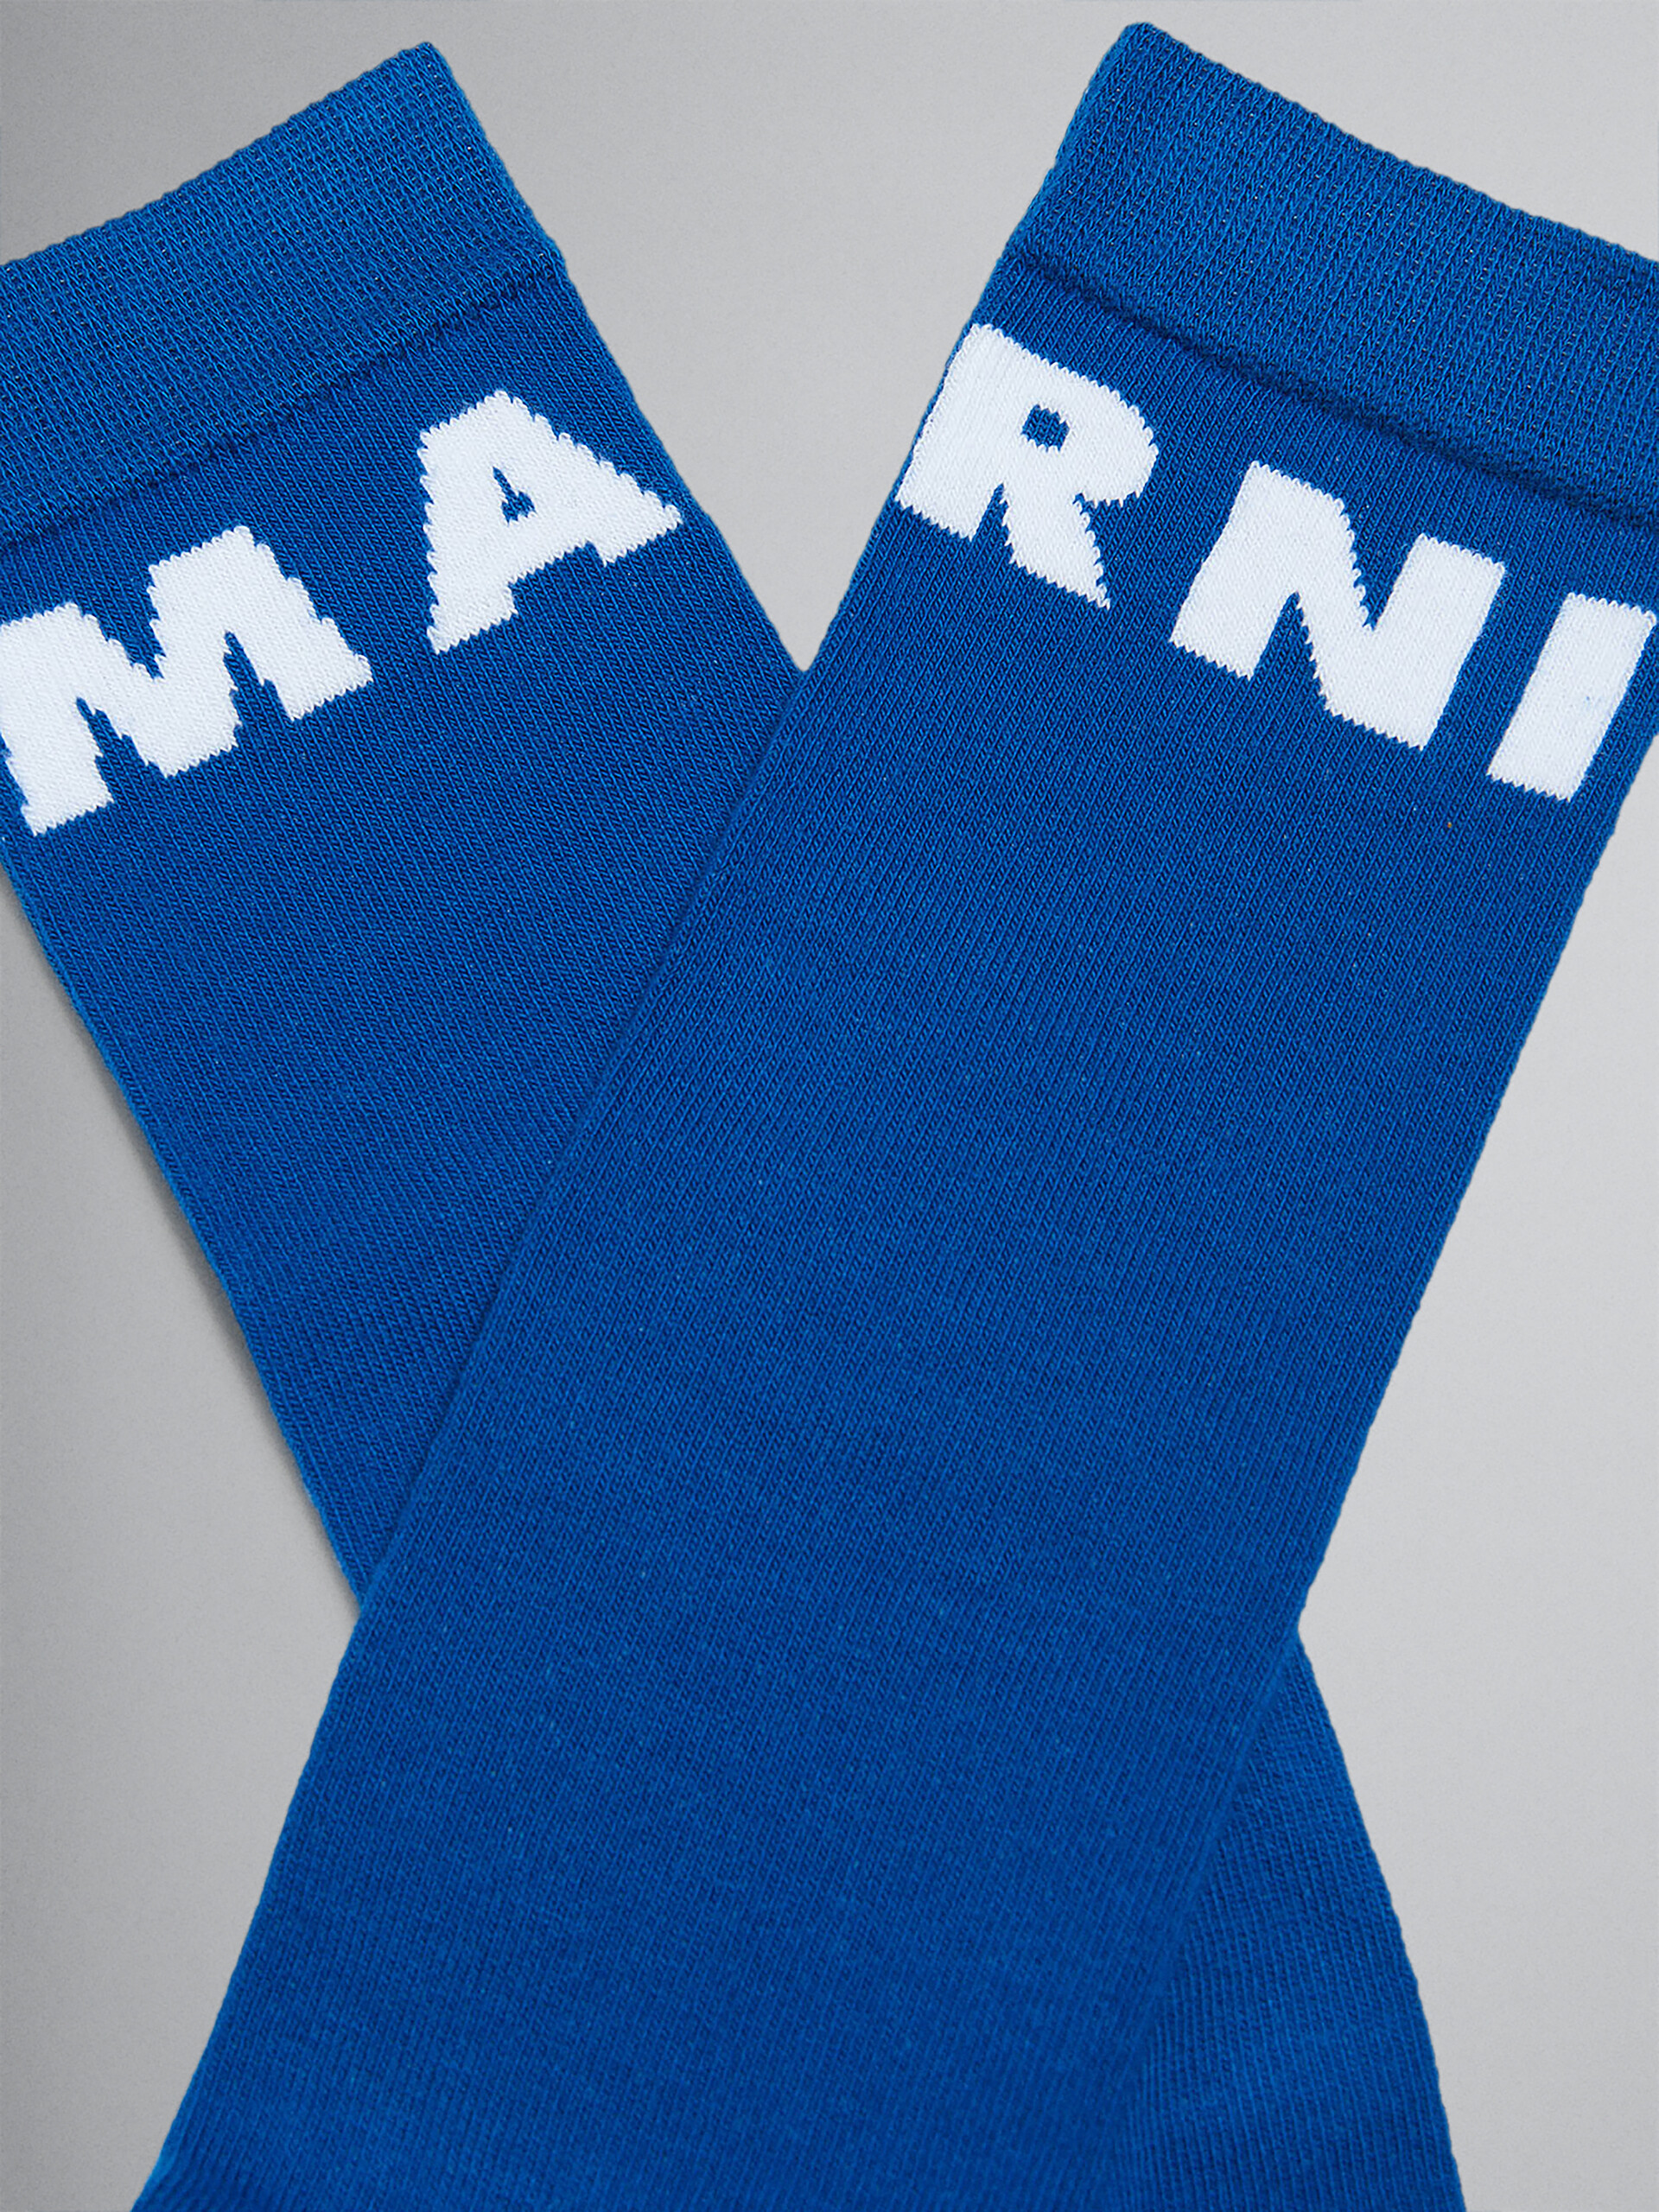 Blue long socks with logo - Socks - Image 2